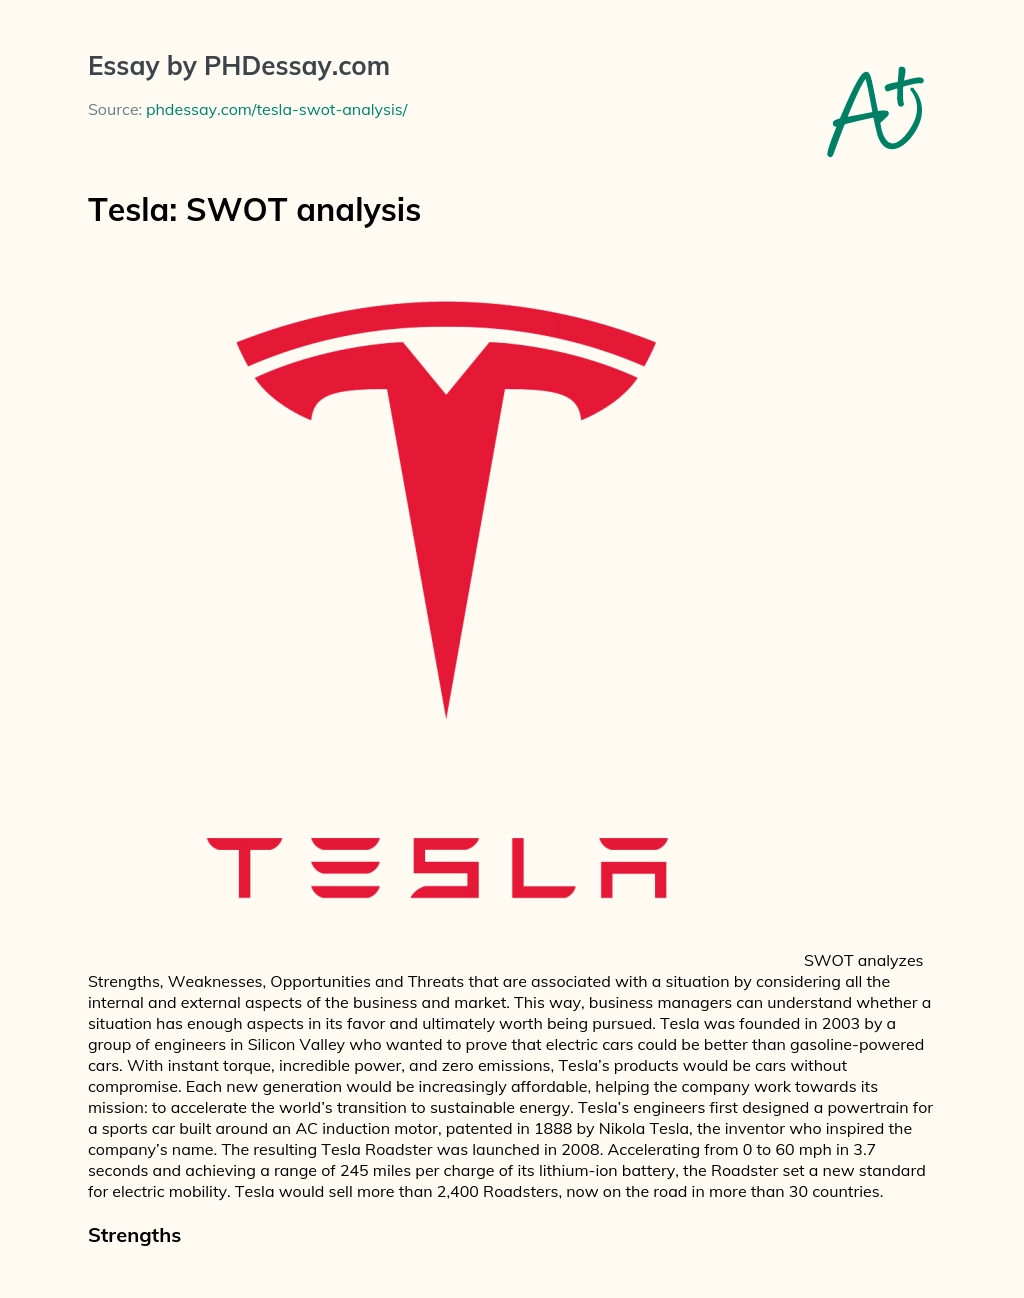 Tesla: SWOT analysis essay